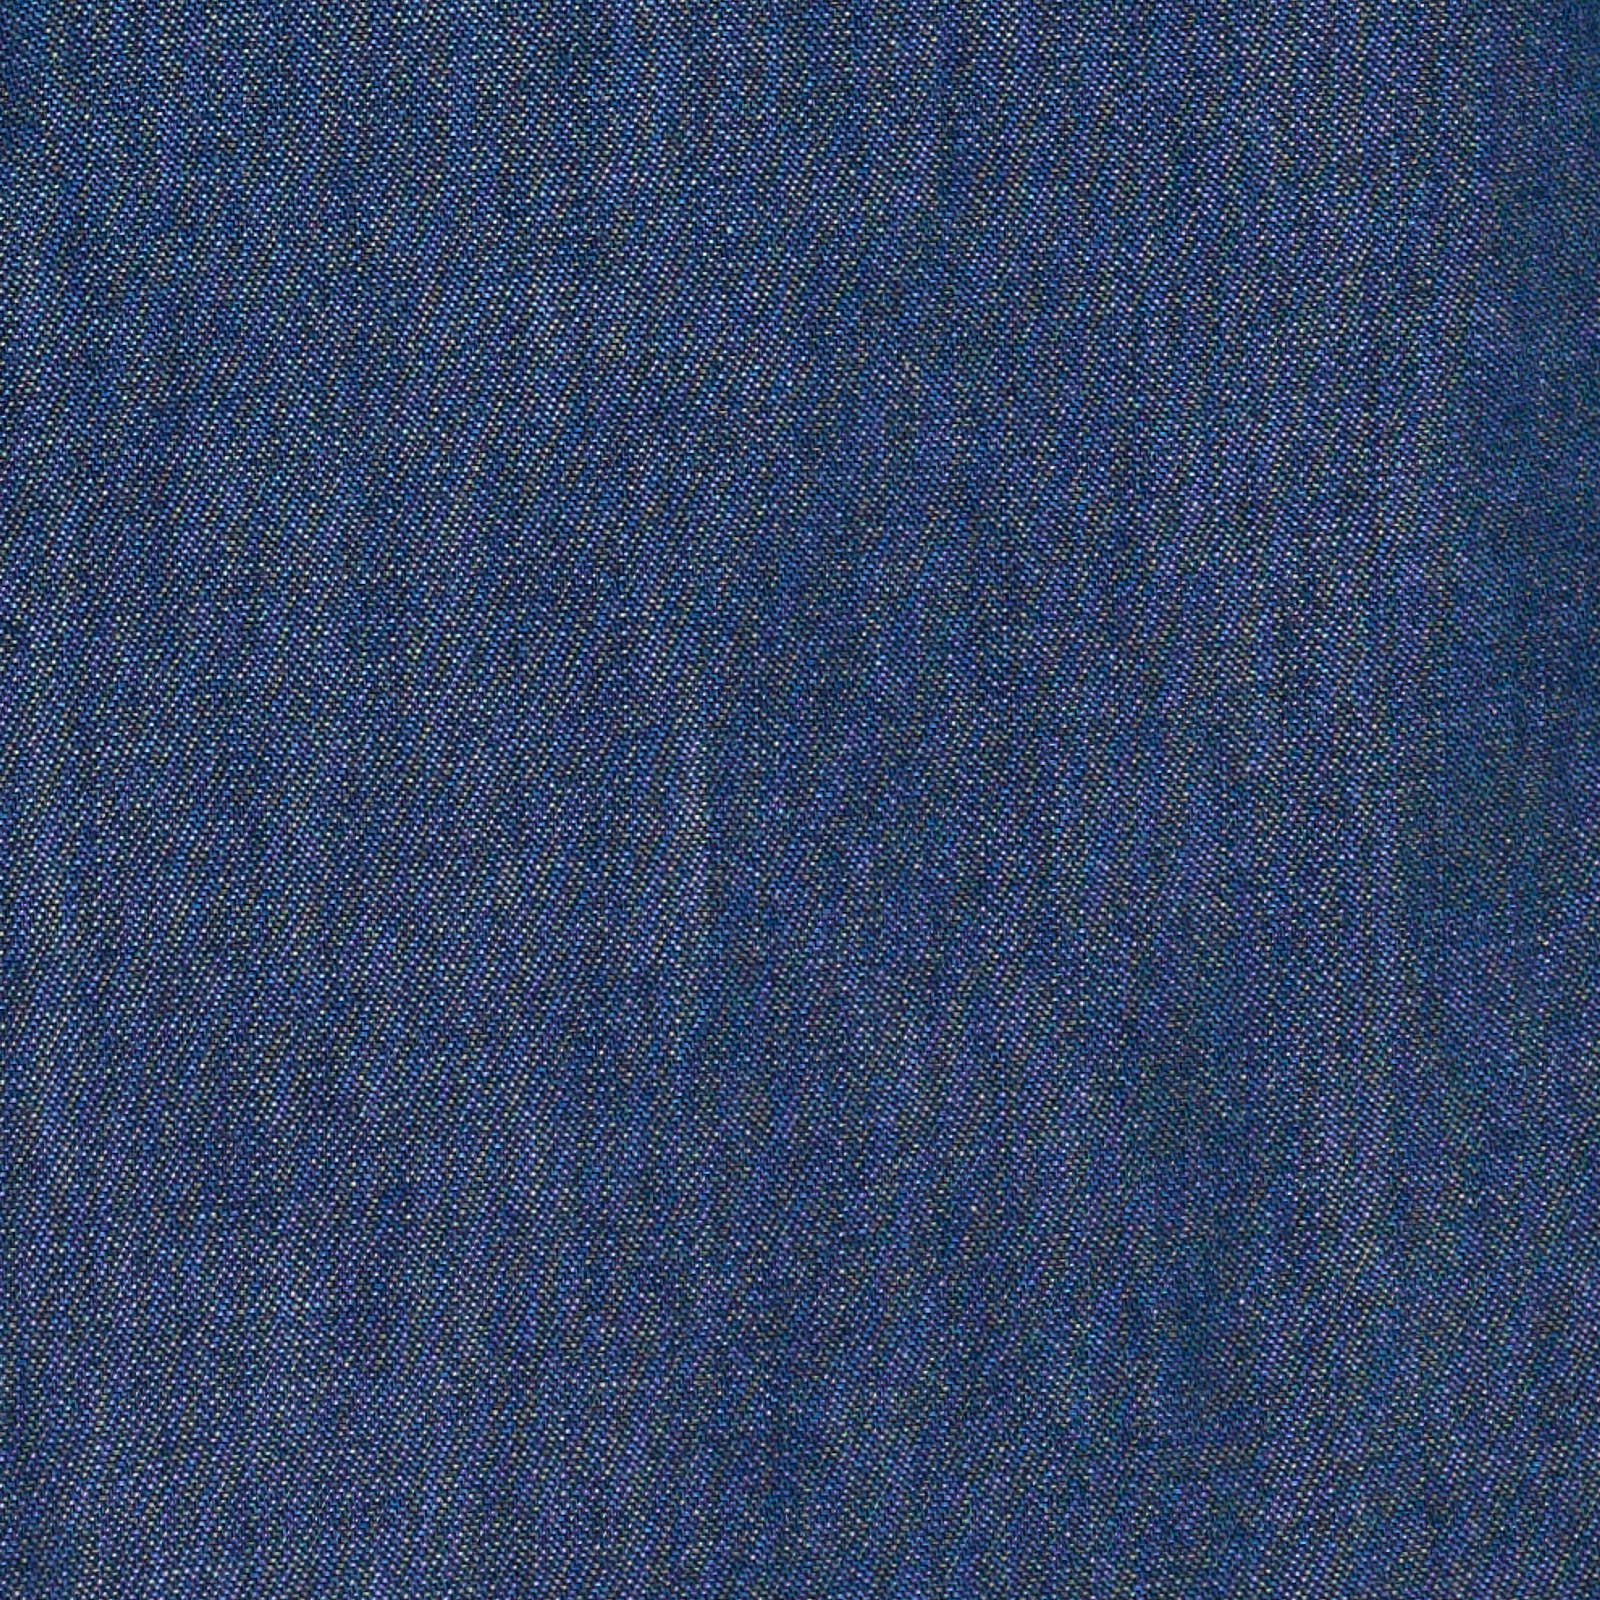 TINTORIA MATTEI 954 Blue Broadcloth Cotton Shirt EU 39 NEW US 15.5